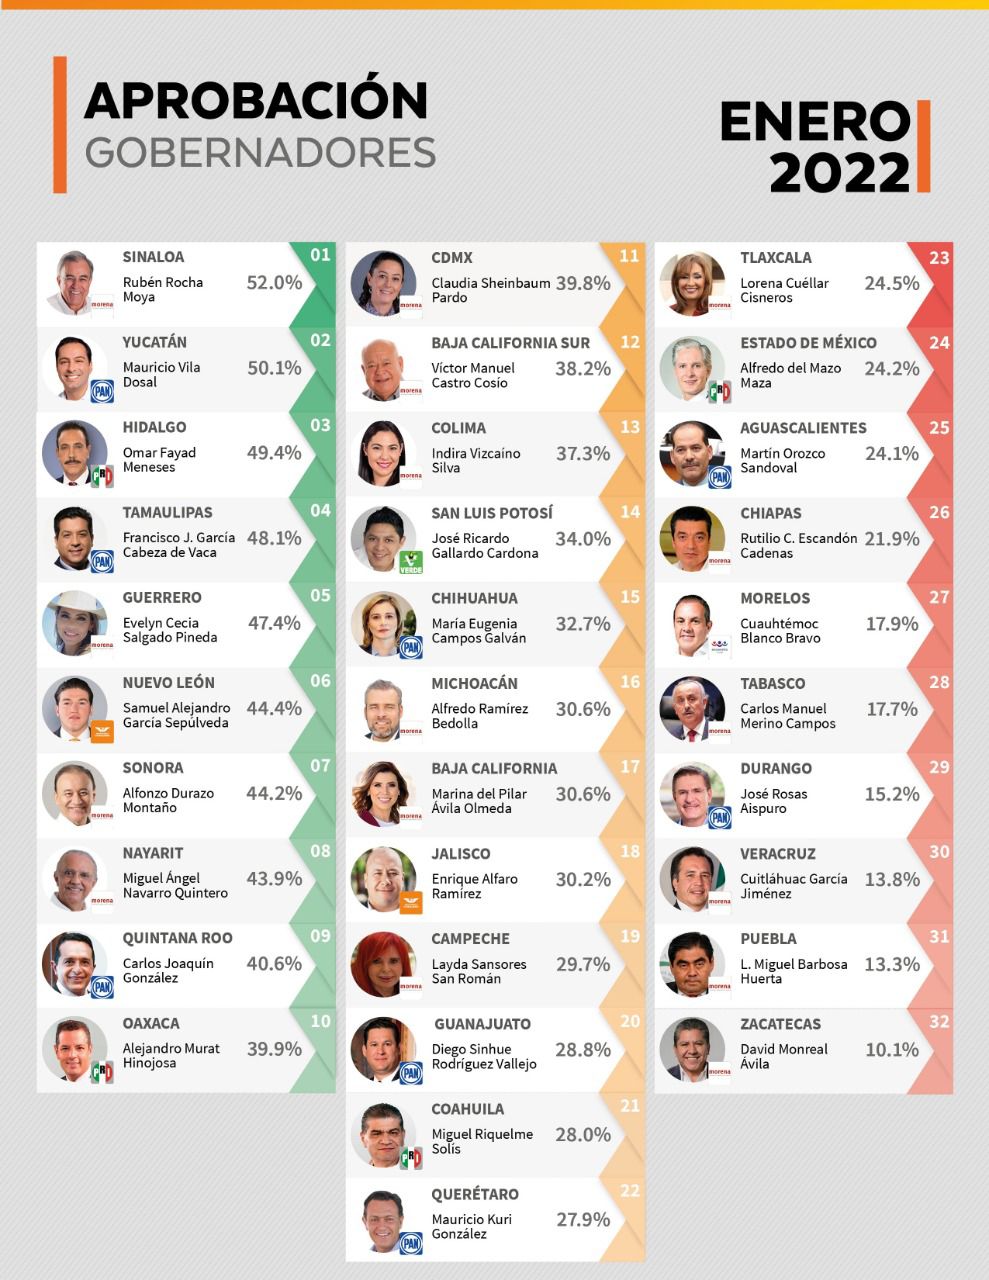 Ricardo Gallardo entre los gobernadores mejor posicionados de México